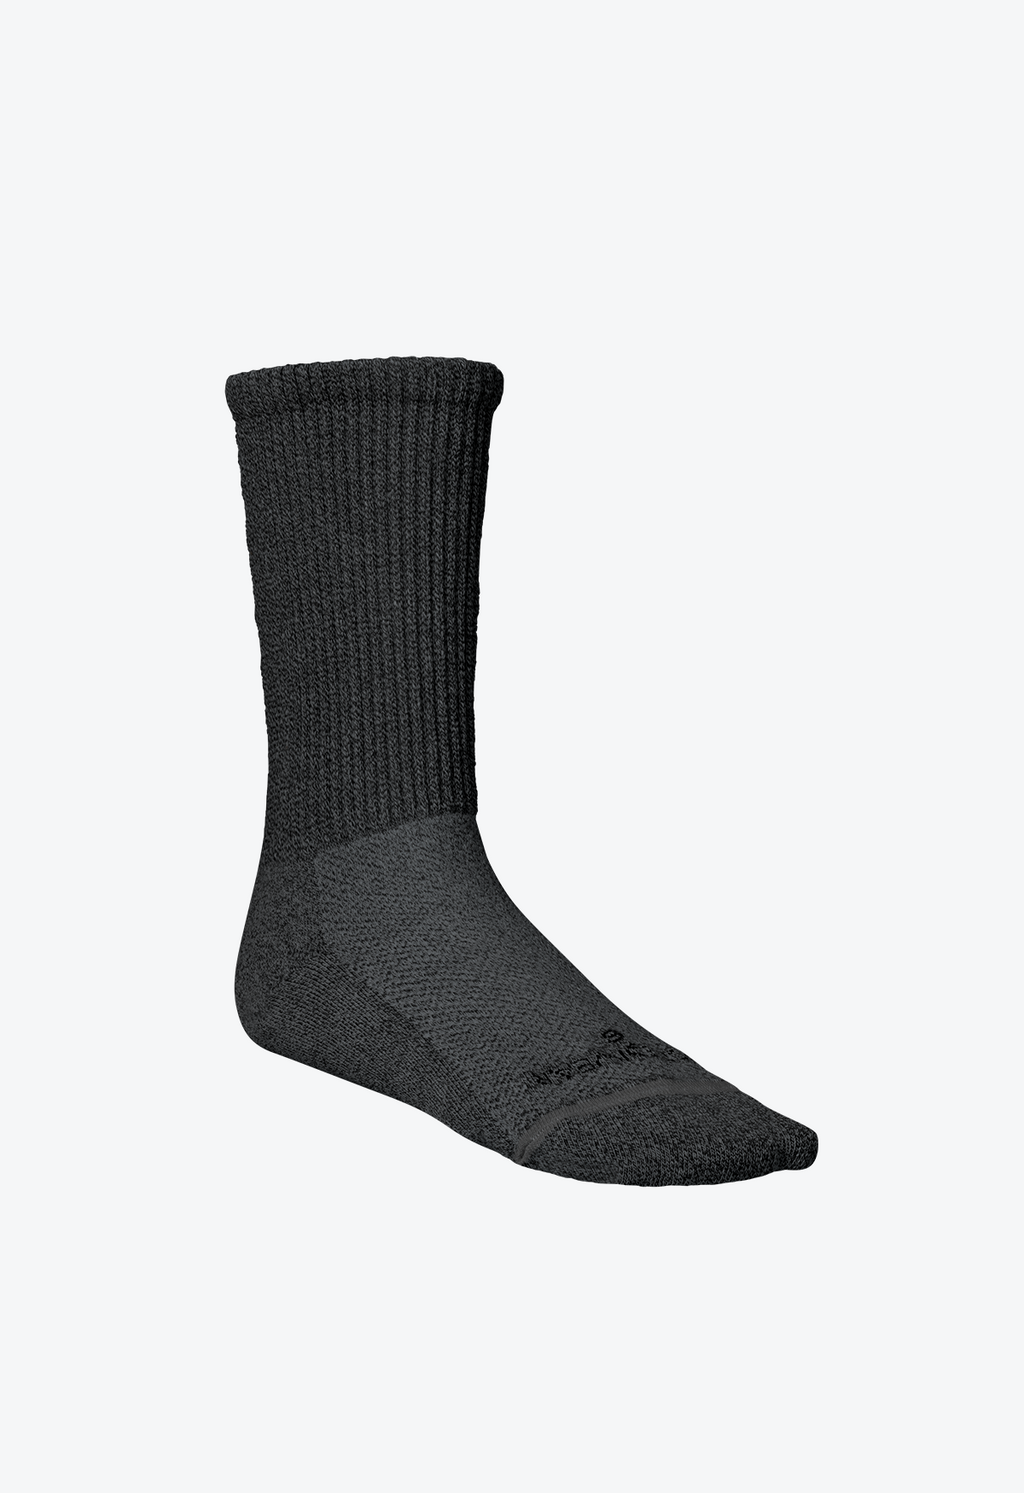 Circulation Socks for Foot Pain Relief & Circulation | Incrediwear